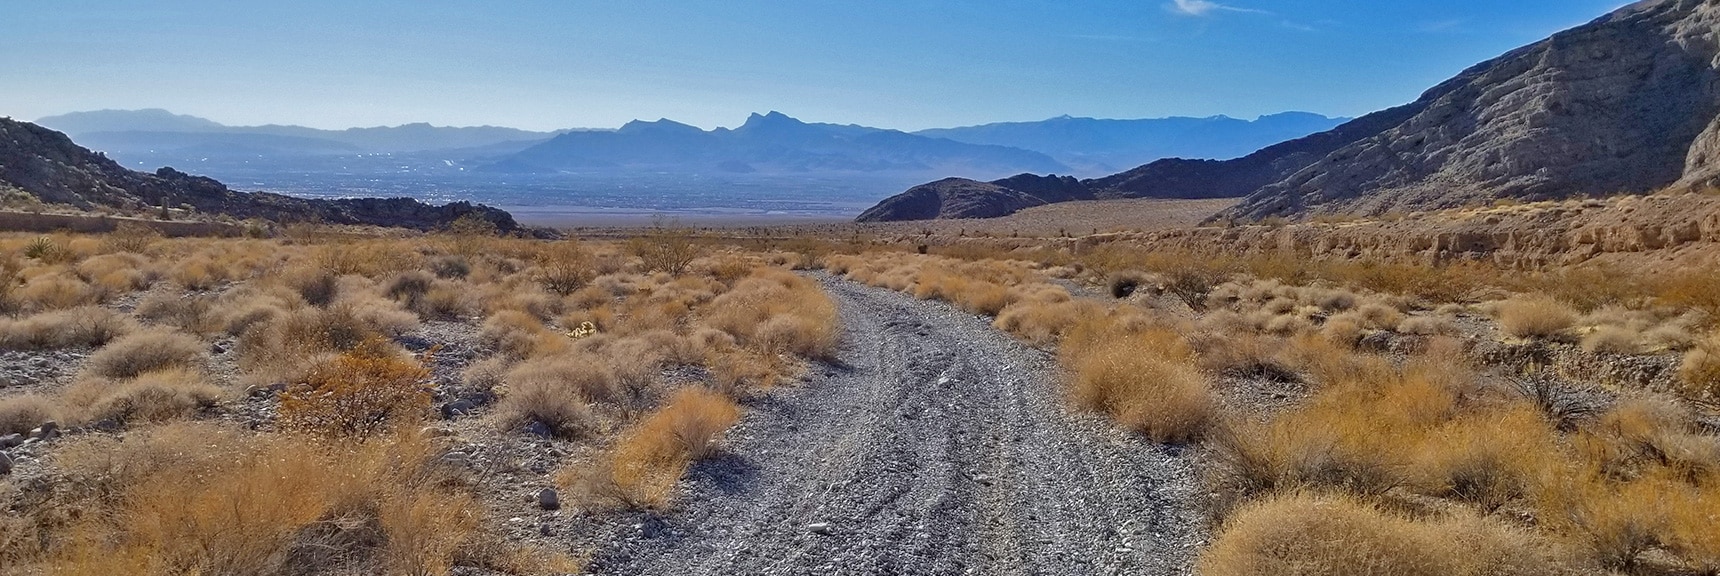 View Down Pass Into North Las Vegas. 3-6-Inch Deep Gravel Slows Mountain Bike to a Walk | Gass Peak Road Circuit | Desert National Wildlife Refuge | Nevada